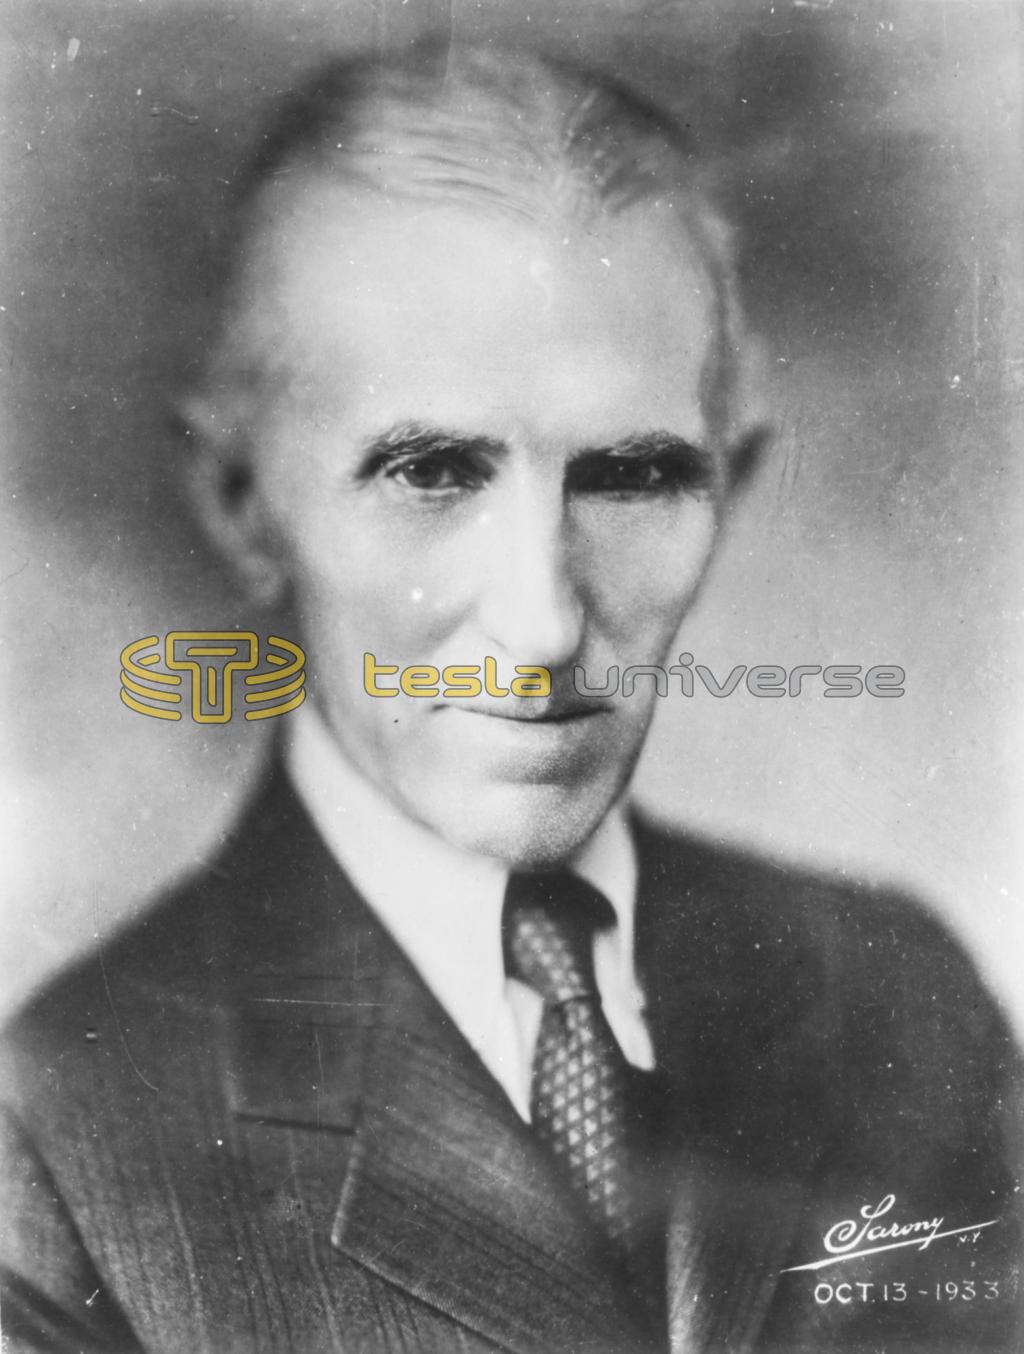 Sarony photograph of Nikola Tesla taken October 13, 1933